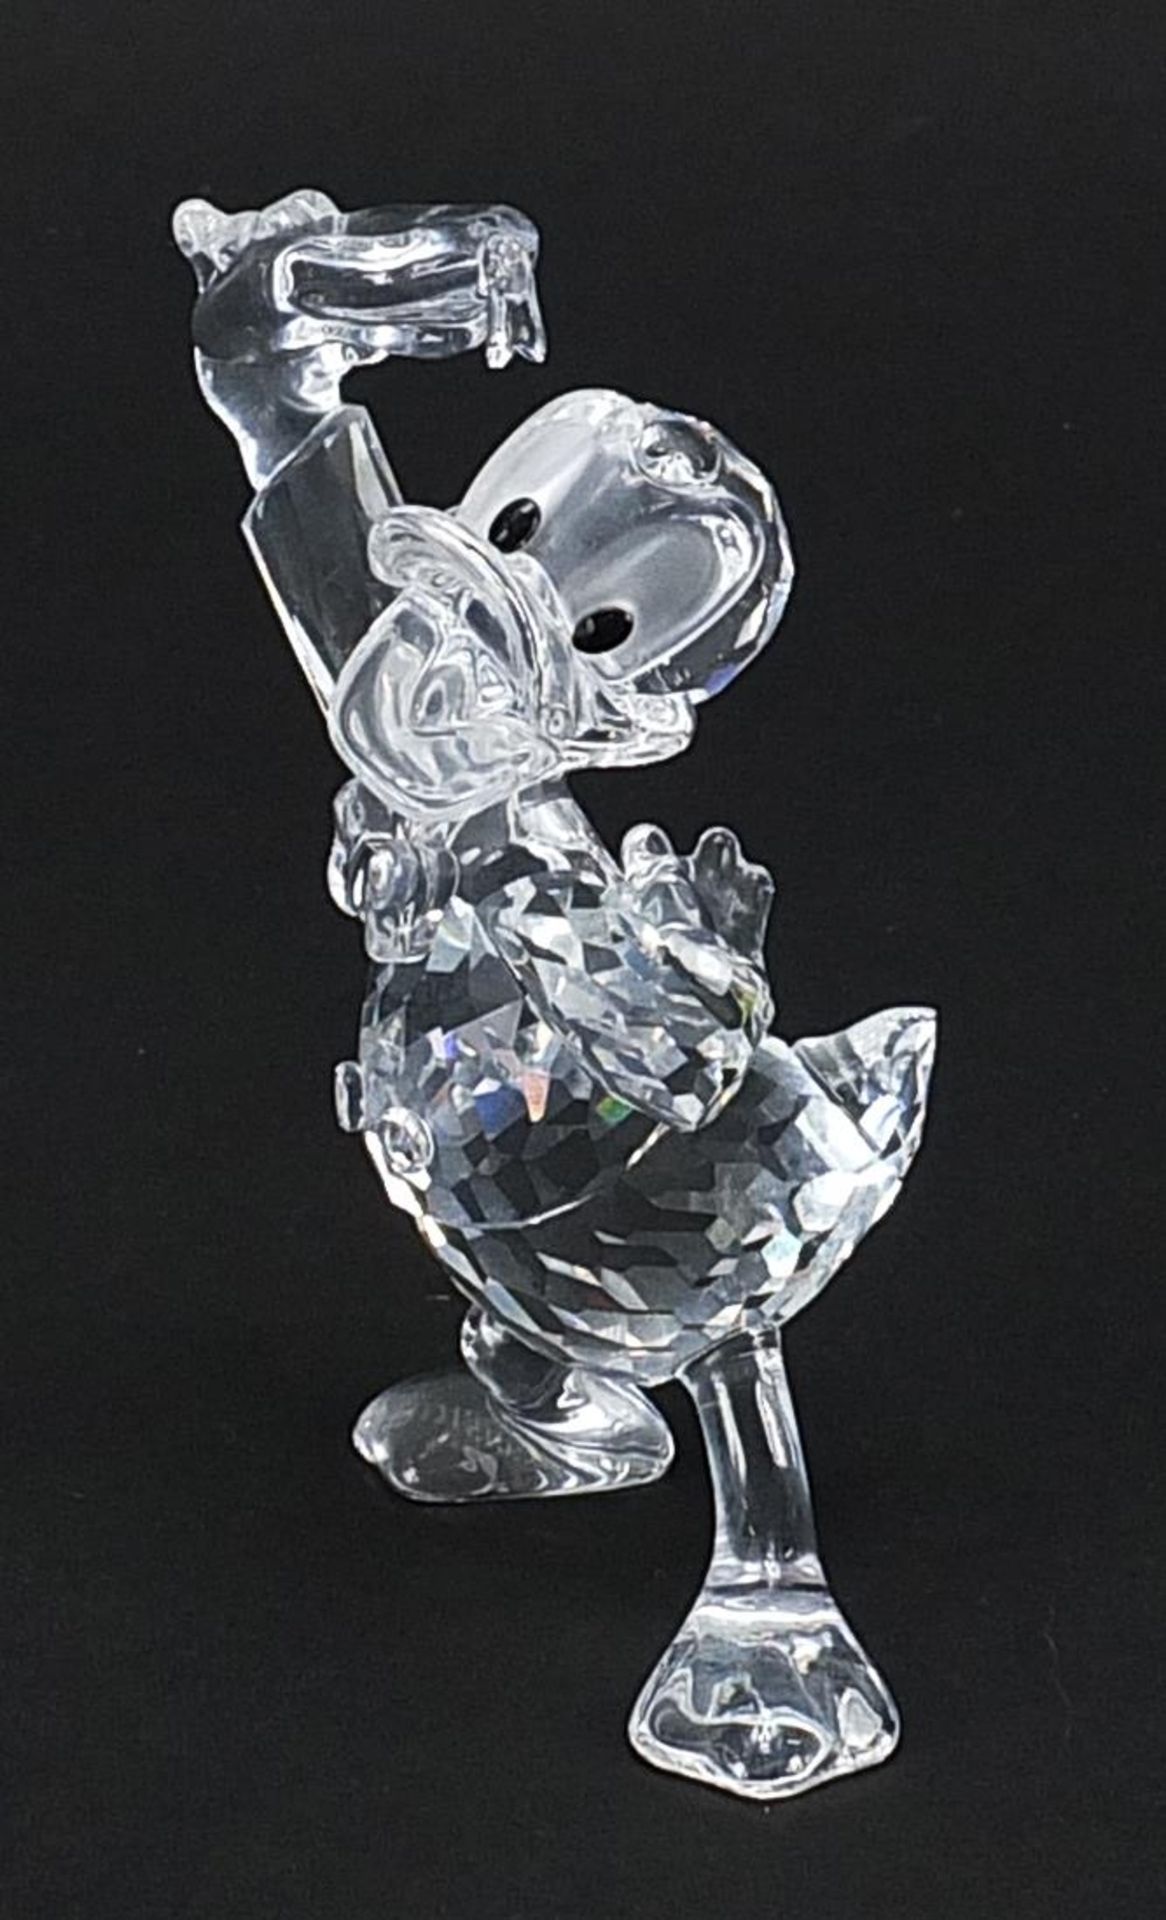 Swarovski Crystal Donald Duck Disney figure with box, 9cm high - Image 2 of 5